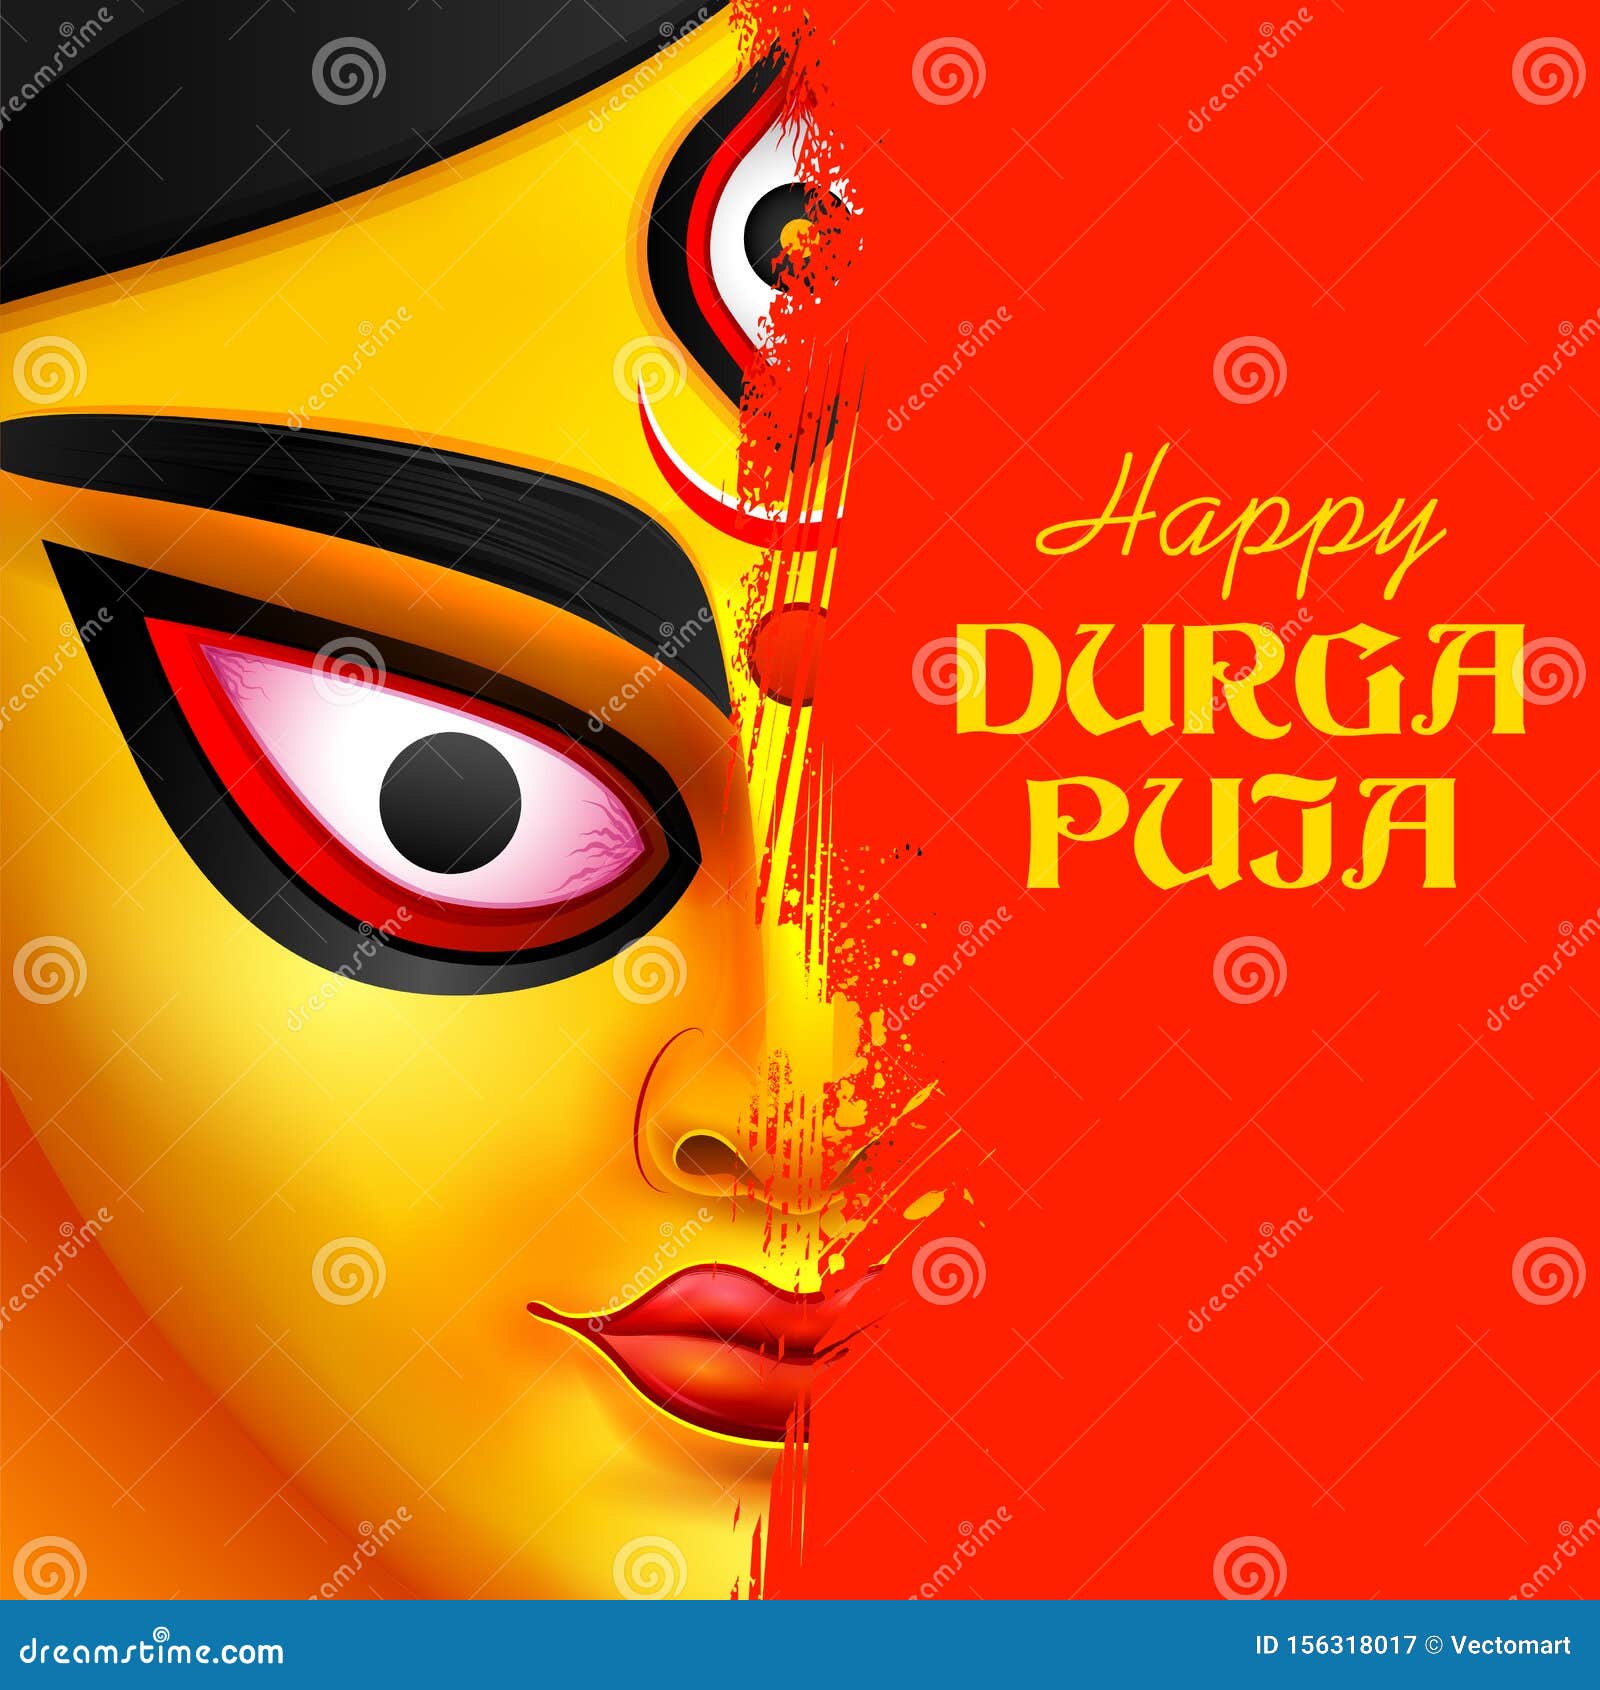 goddess durga face in happy durga puja subh navratri indian religious header banner background